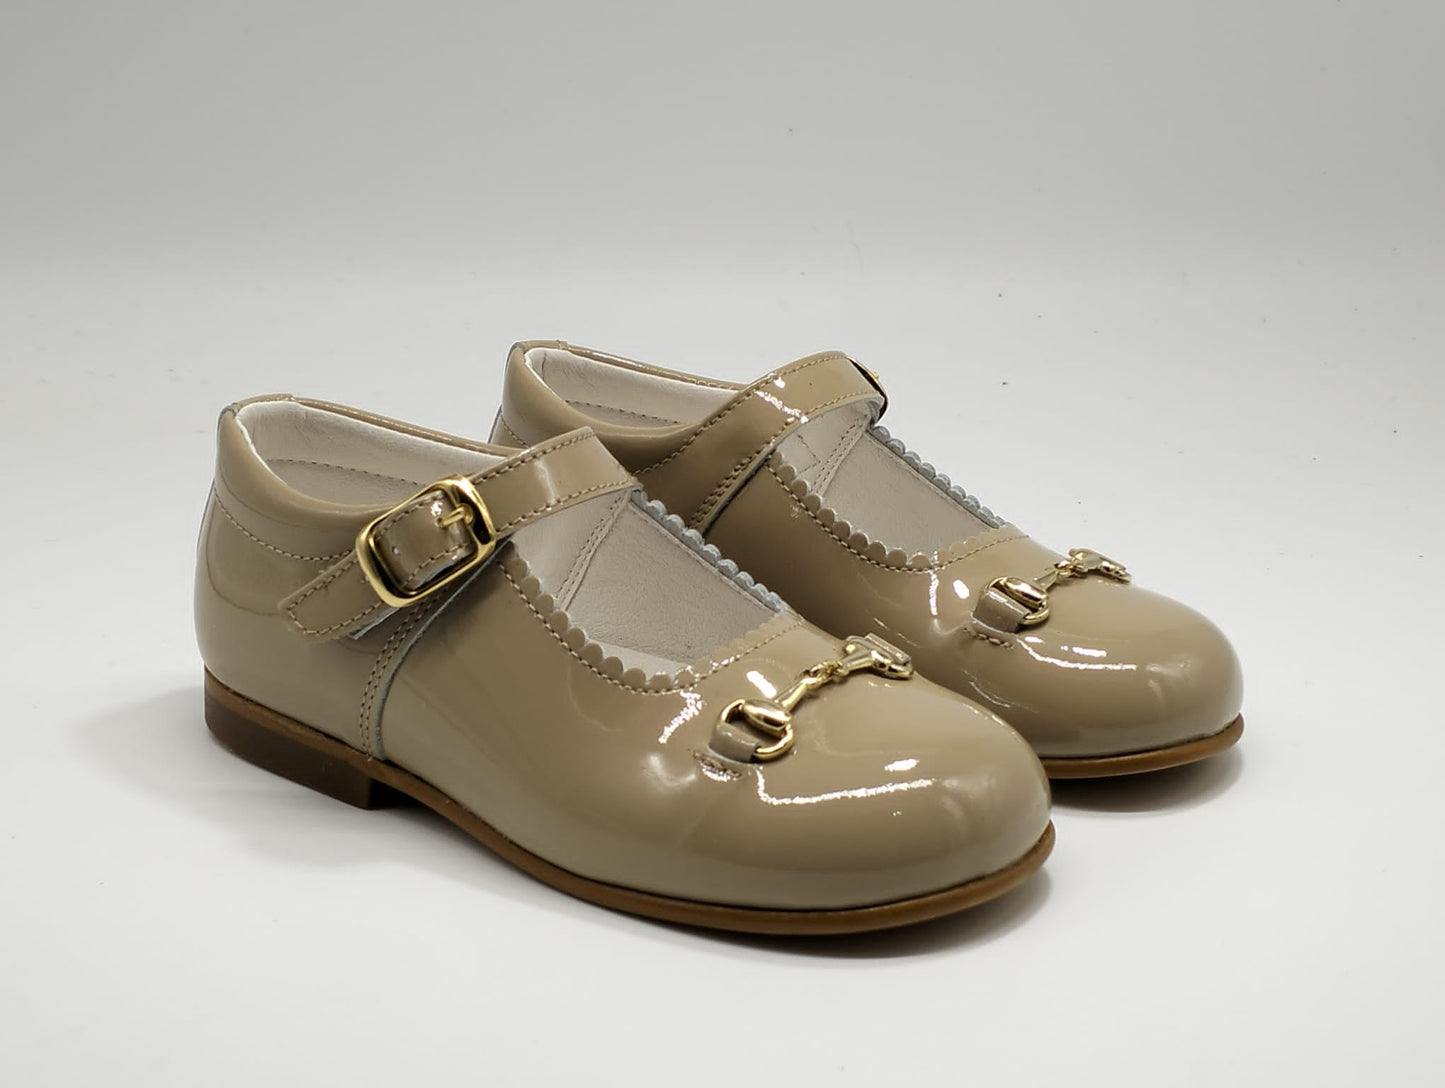 6270-2 Camel Tan Shoe with Horsebit.